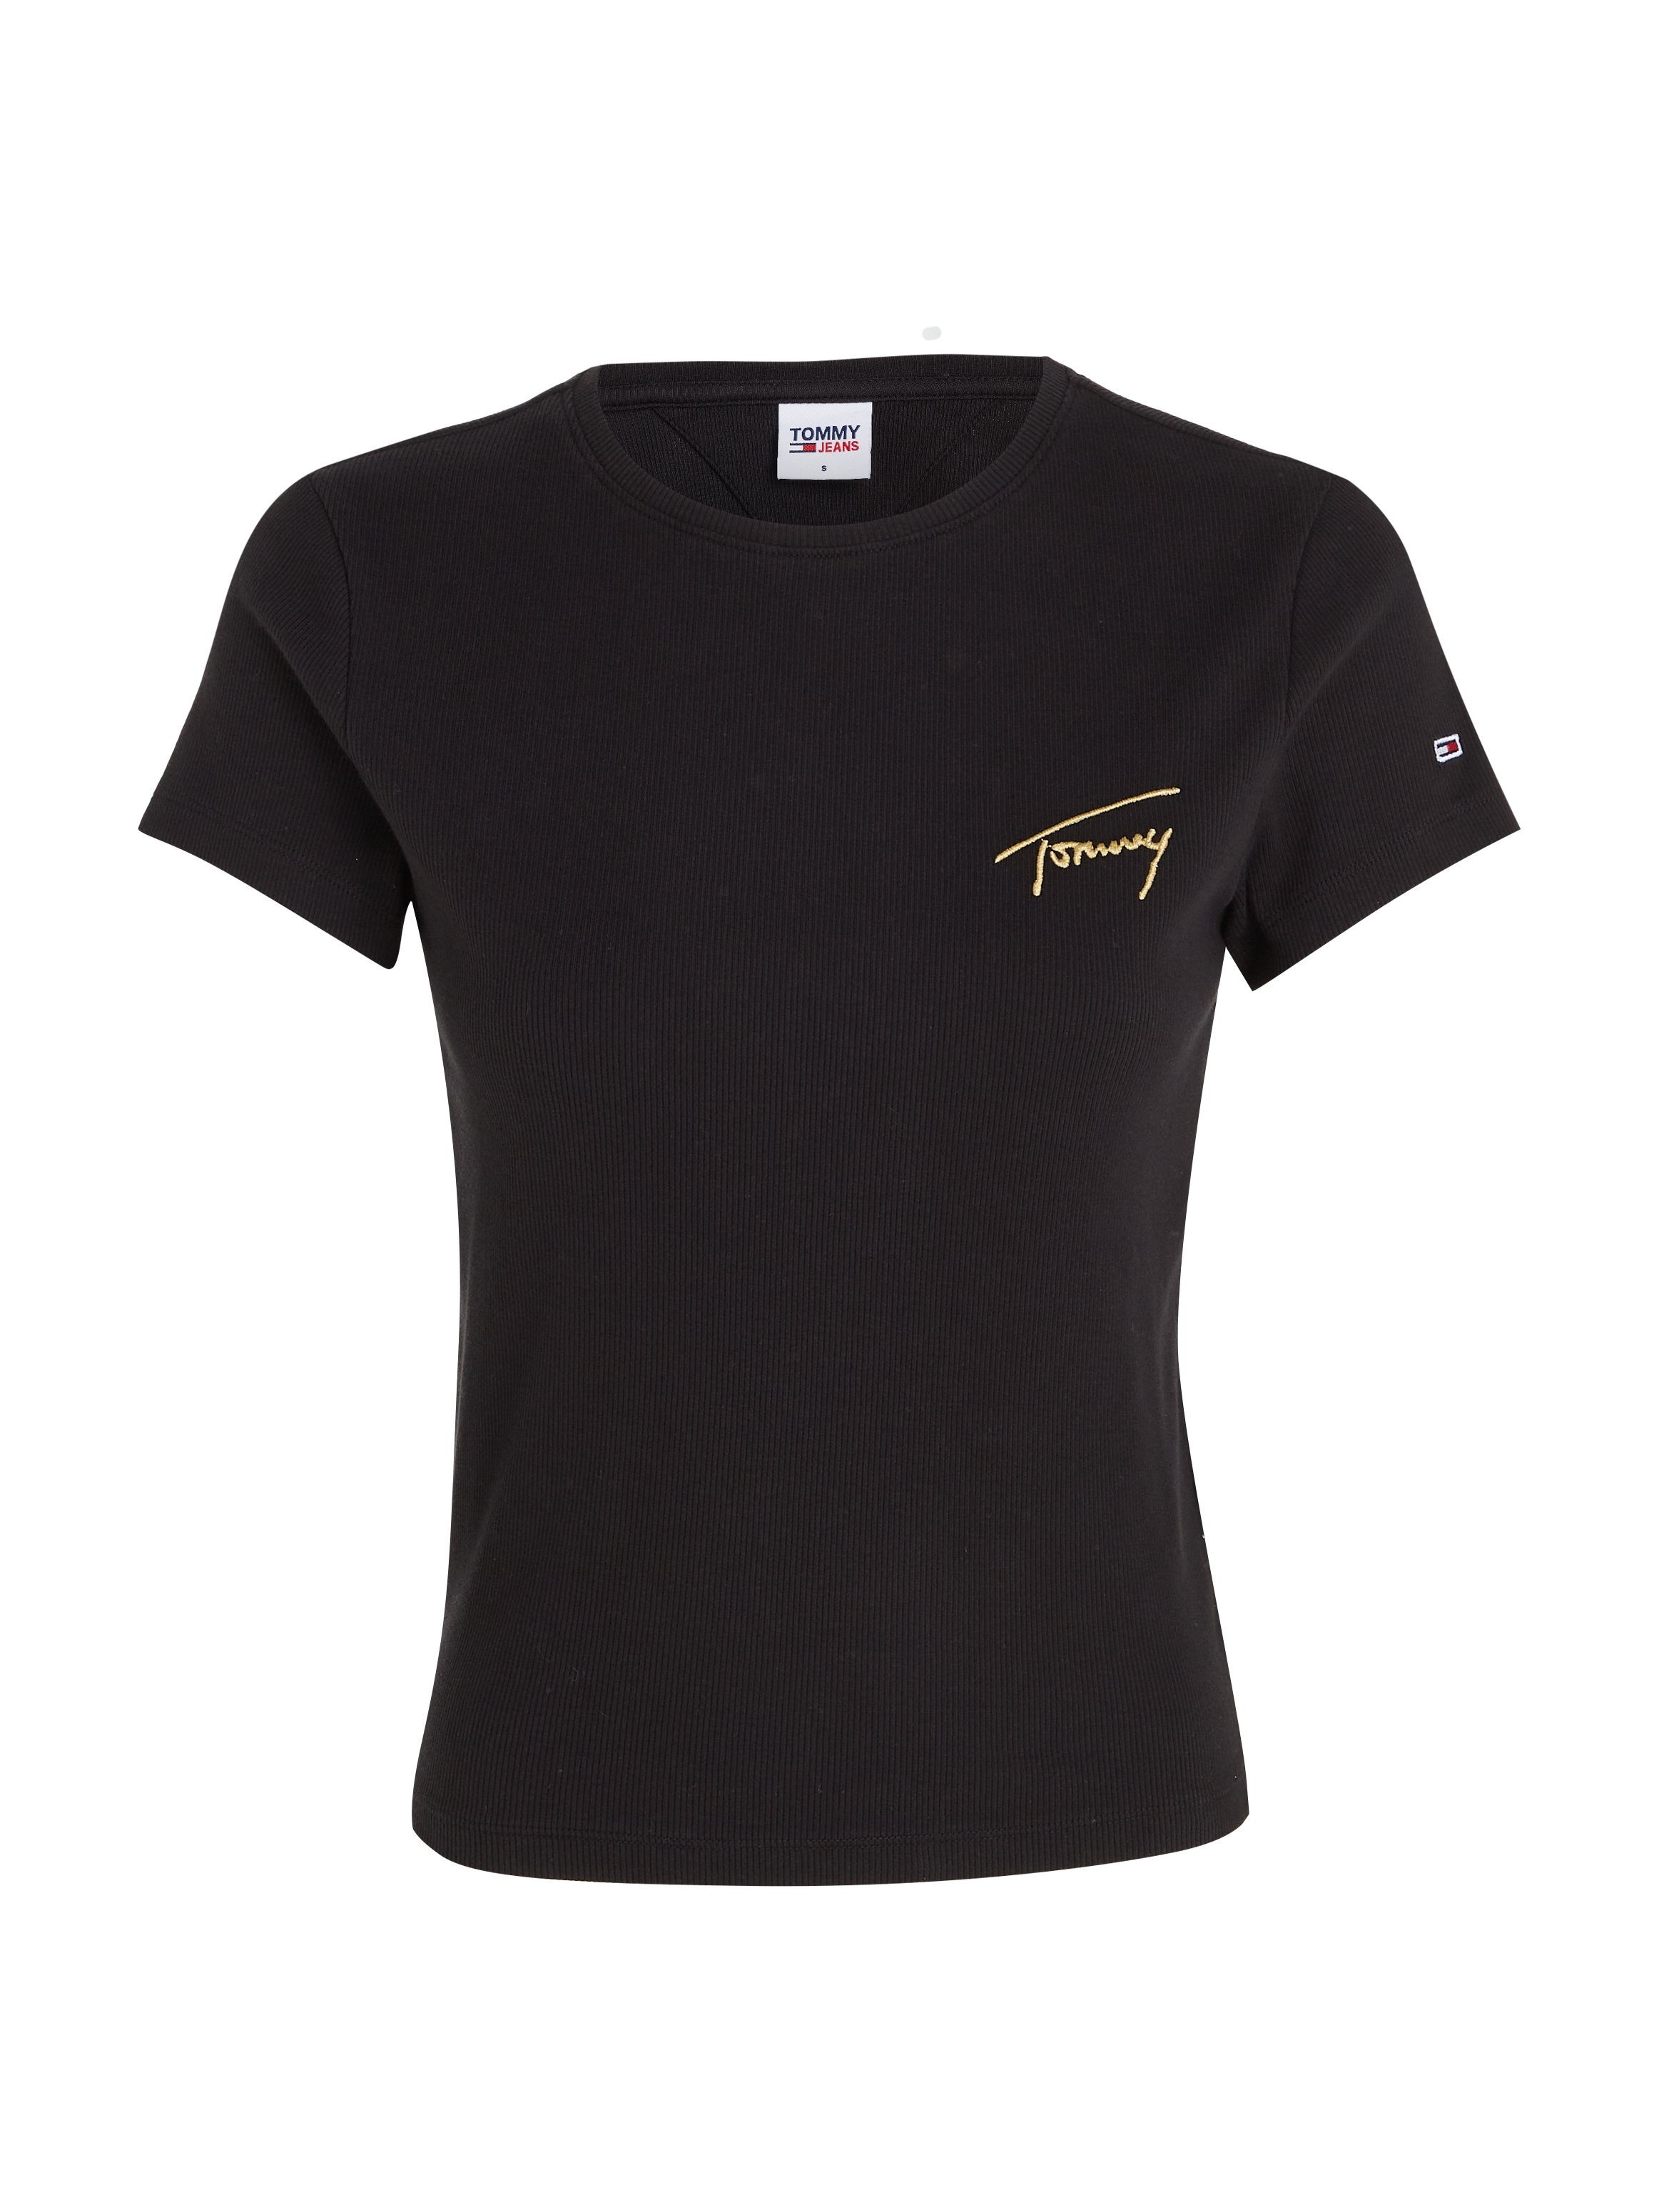 Jeans GOLD TEE Tommy Logo-Schriftzug SS goldfarbenen T-Shirt SIGNATURE Signature BBY mit TJW